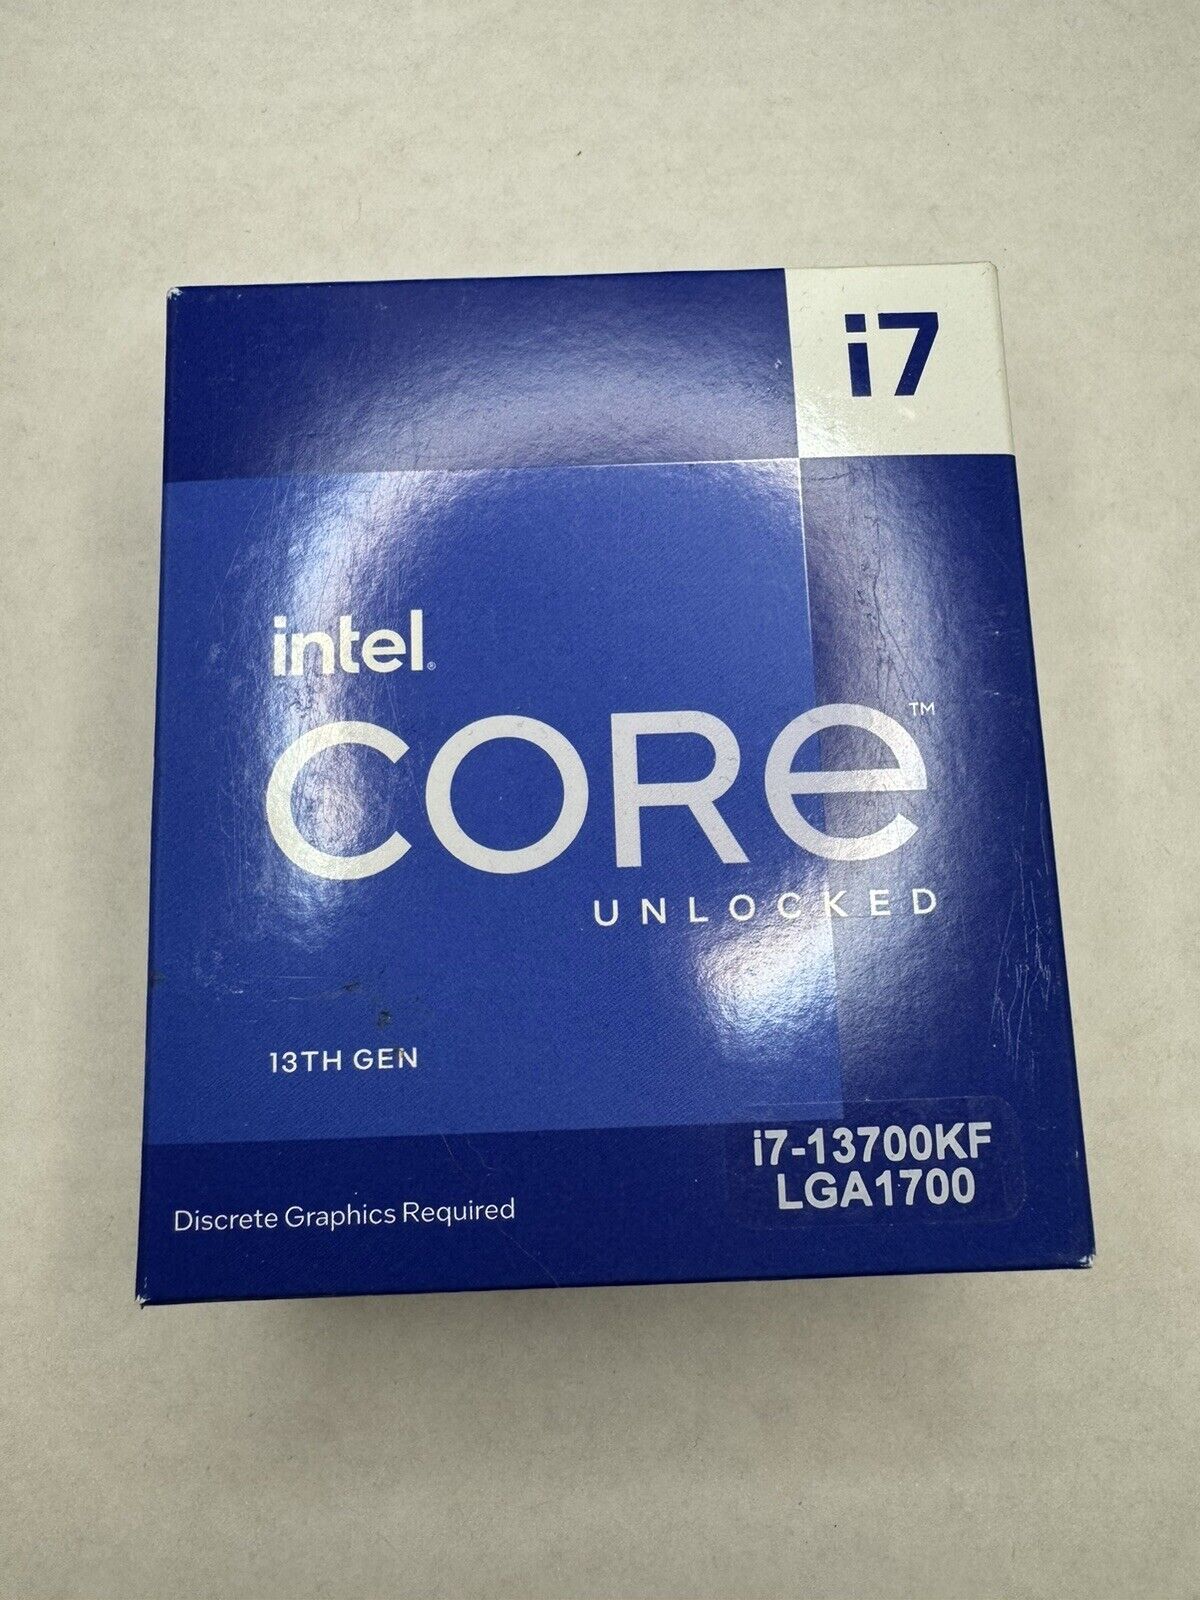 Intel Core i7-13700KF Processor (up to 5.4 GHz, 16 Cores, LGA 1700) Box